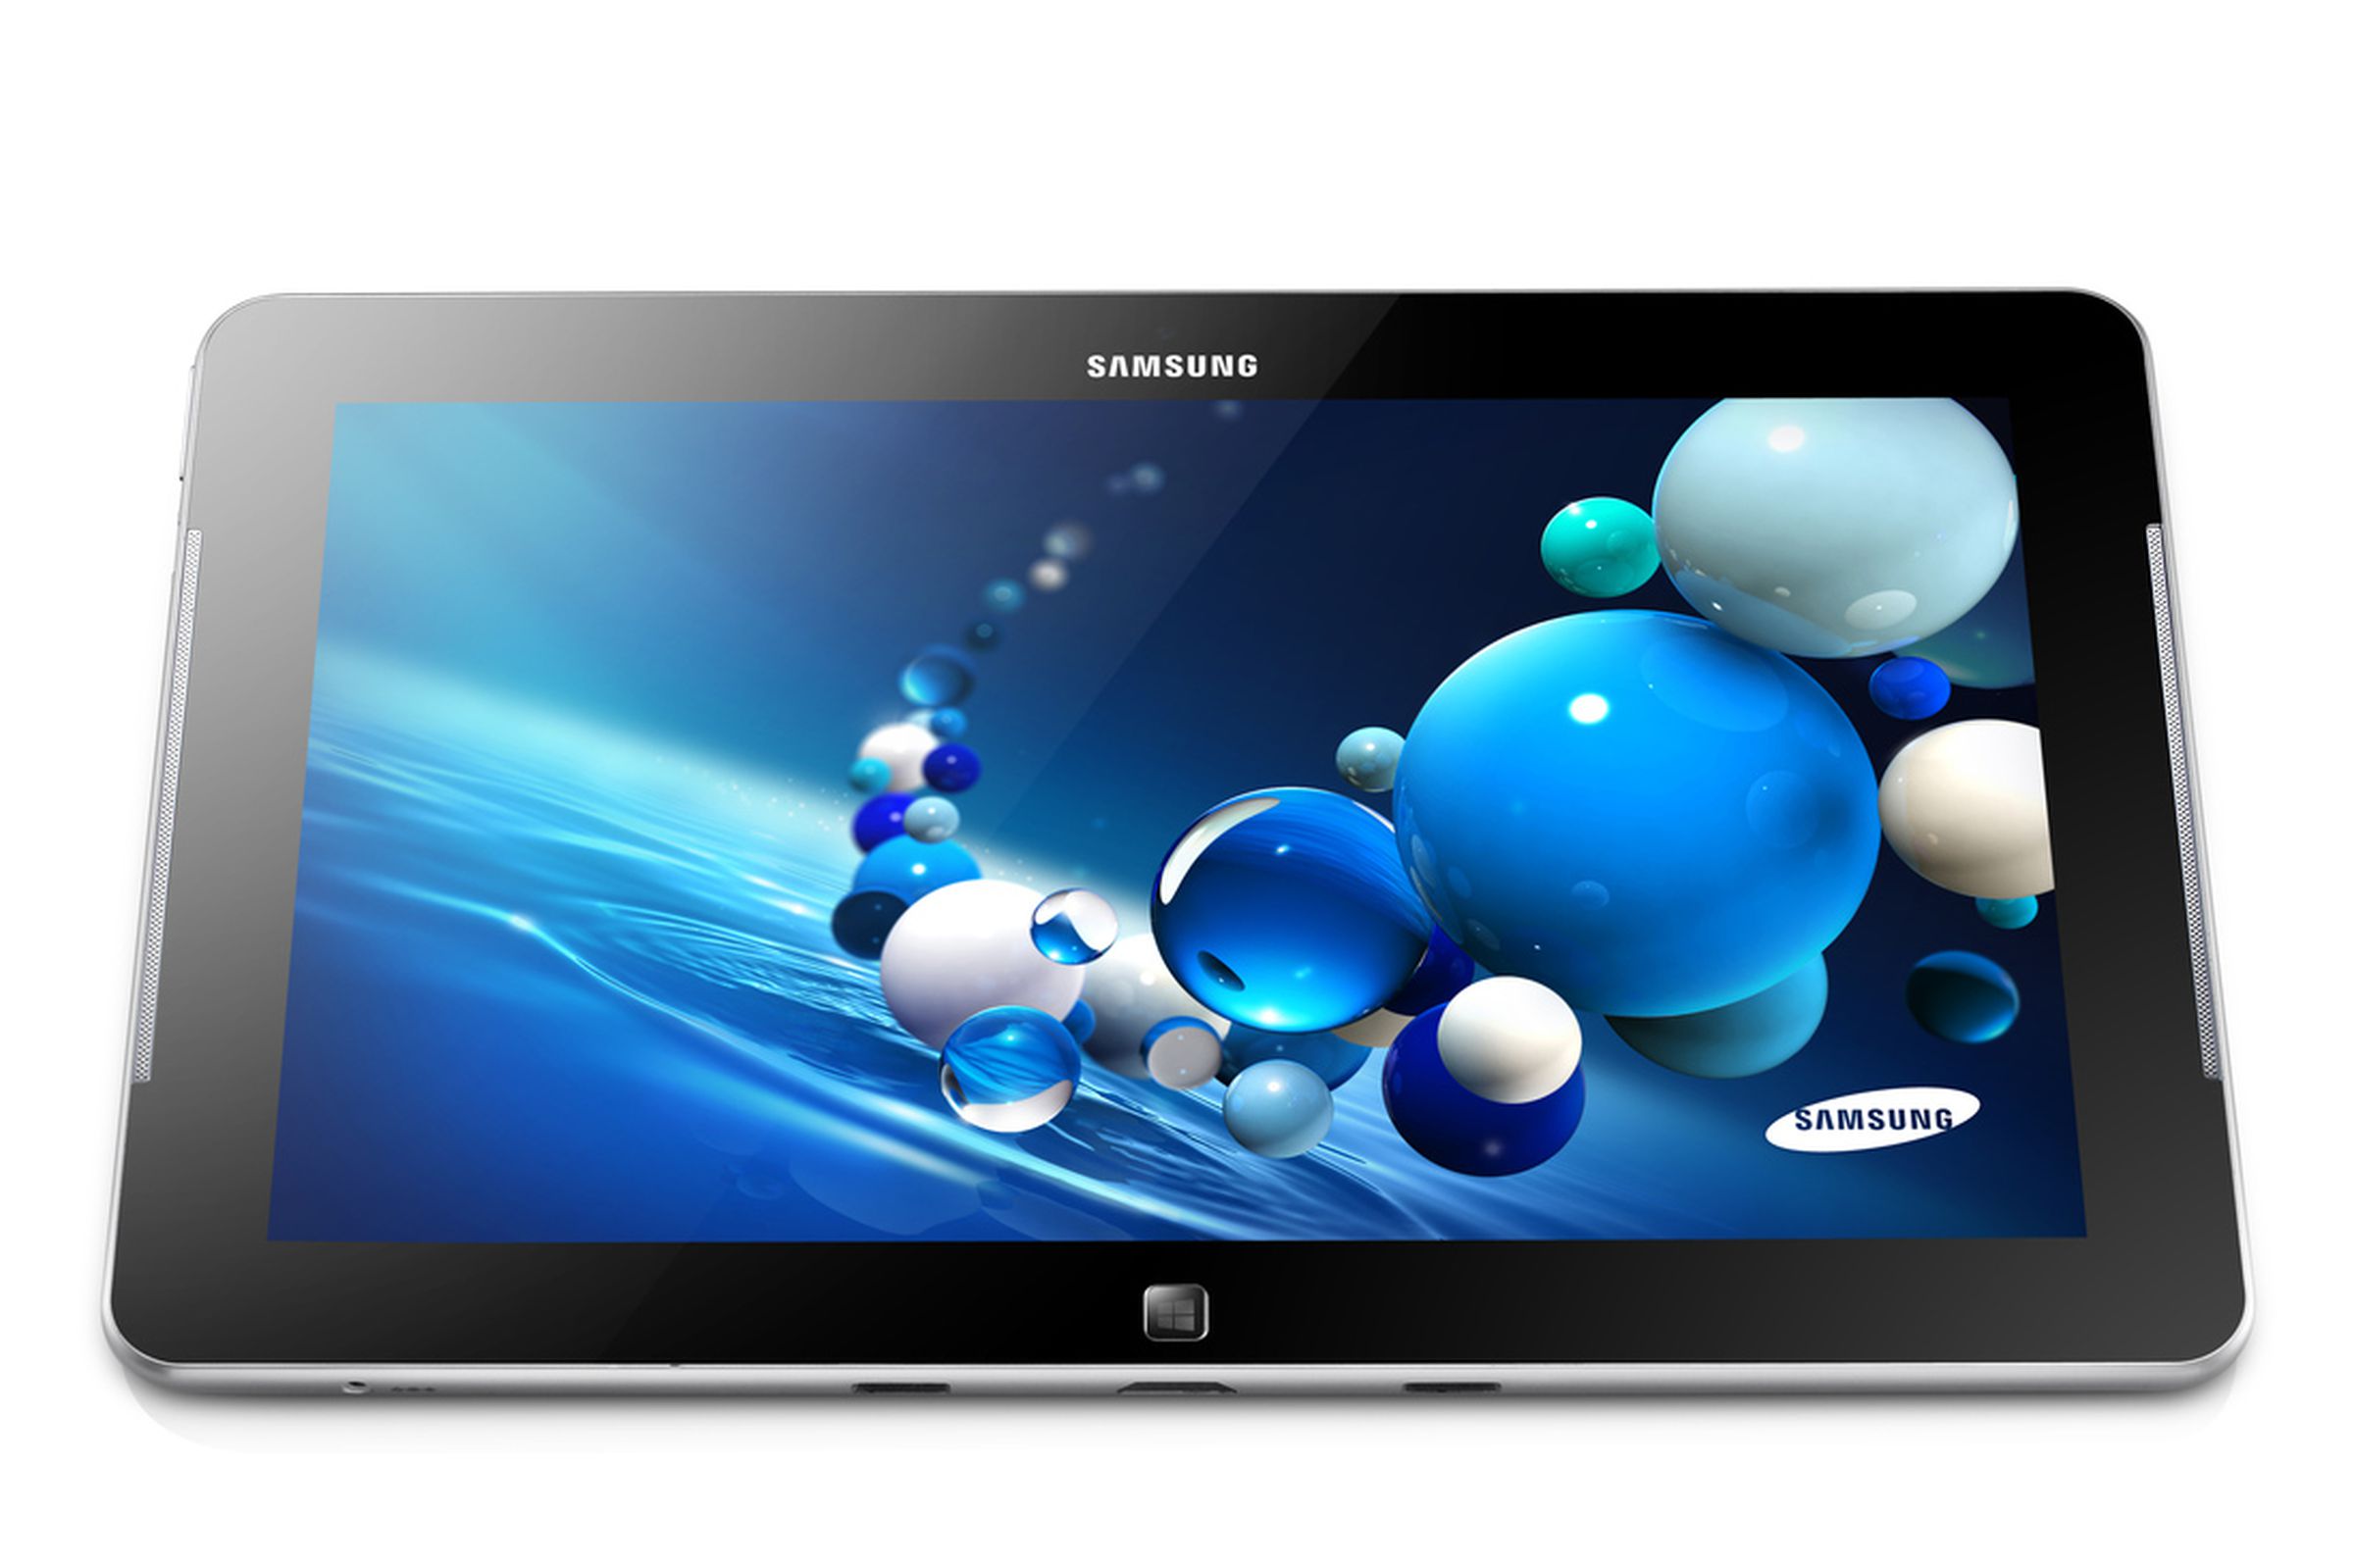 Samsung Ativ Smart PC Pro press images